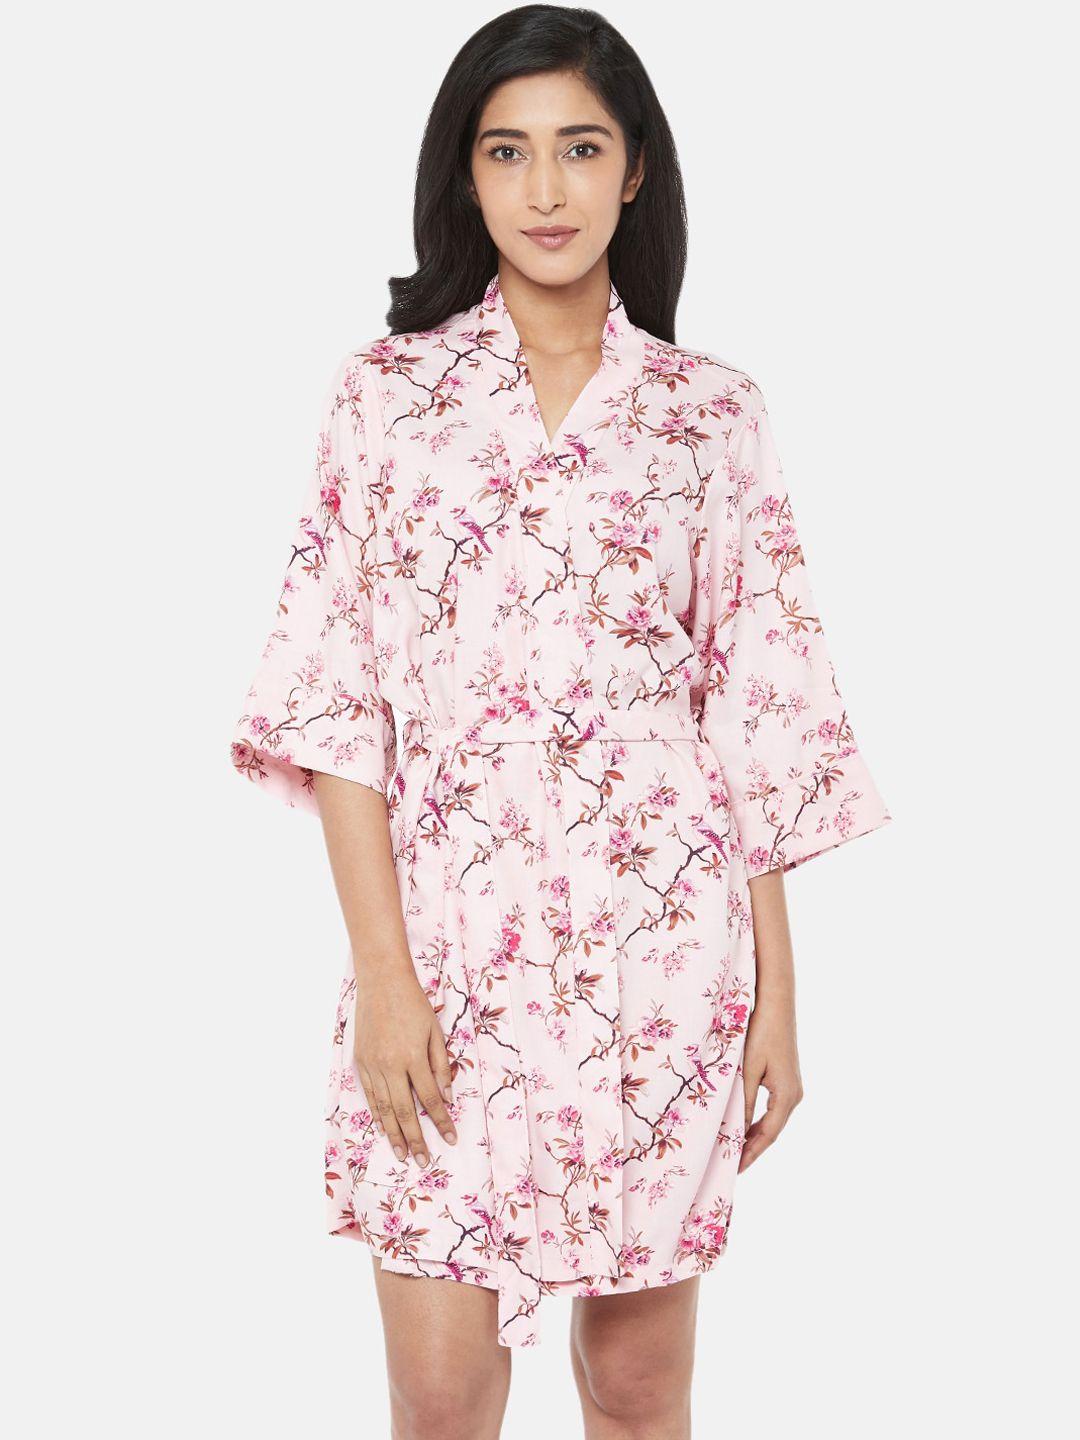 dreamz by pantaloons women pink & brown floral printed sleep shirt